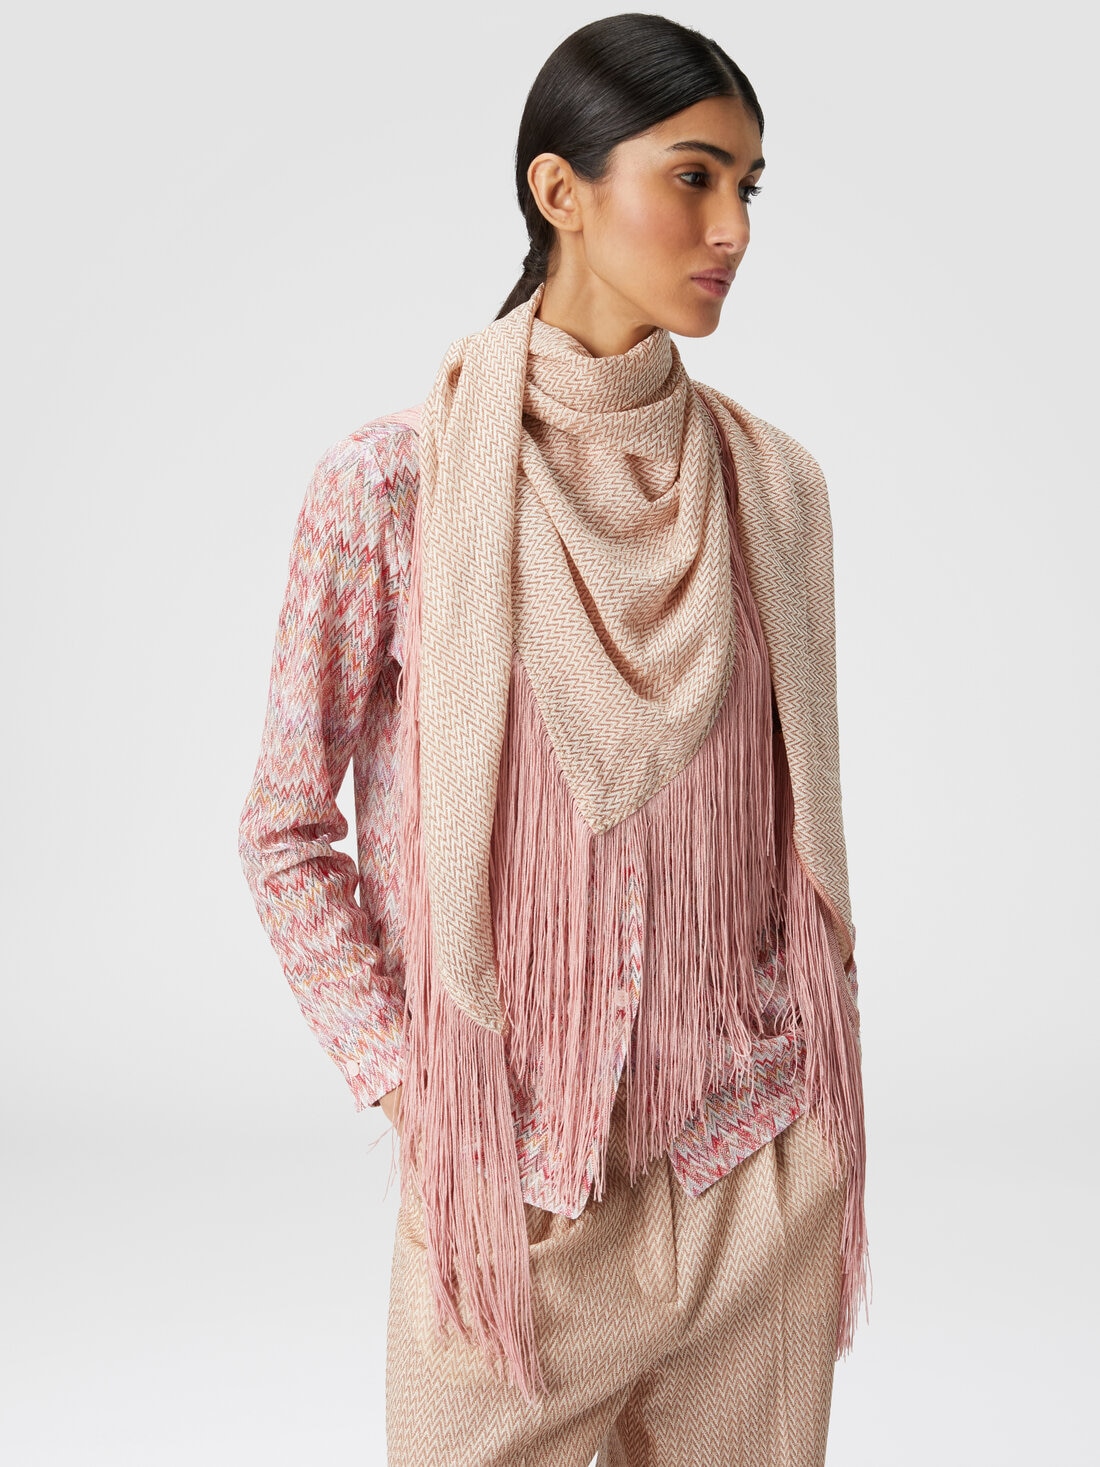 Lamé viscose chevron shawl with fringes, Multicoloured  - 8053147142180 - 2